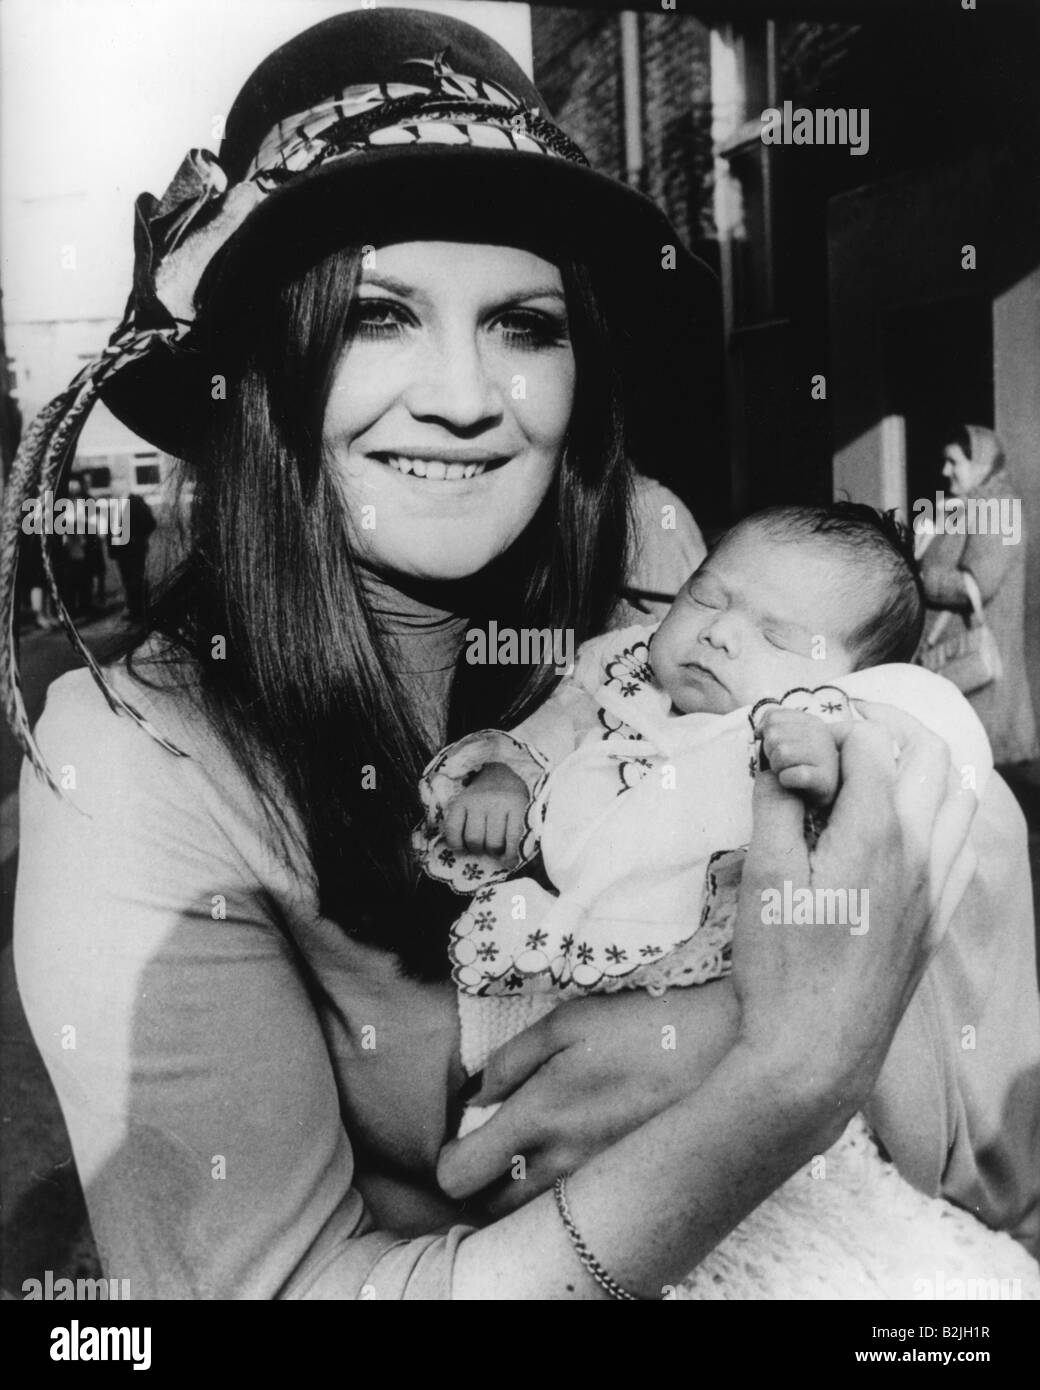 Shaw, Sandie, * 26.2.1947, British musician / artist, (singer), (Pop music), half length, with her daughter Grace, leaving Lewisham Hospital, London, February 1971, Stock Photo